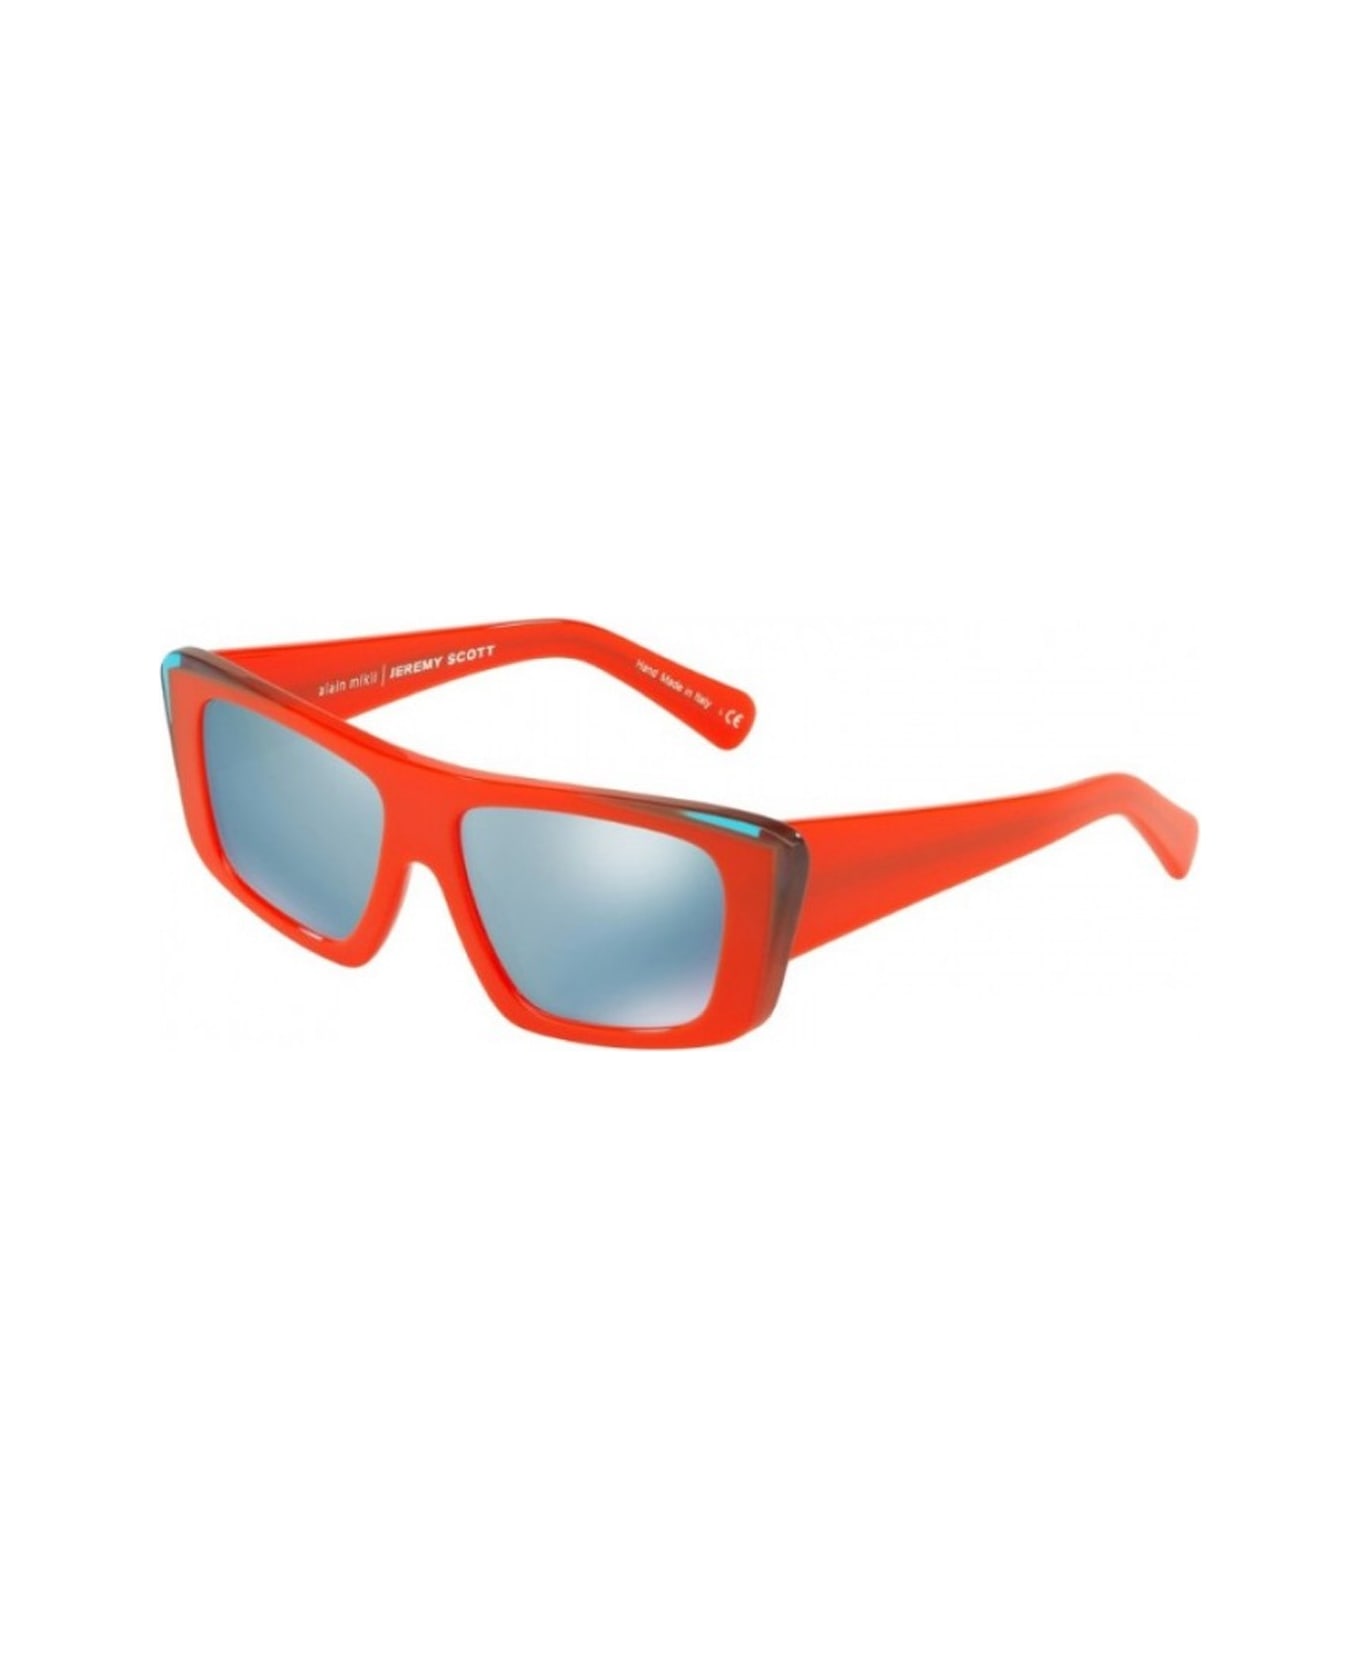 Alain Mikli A05029 Special Edition Sunglasses - Arancione